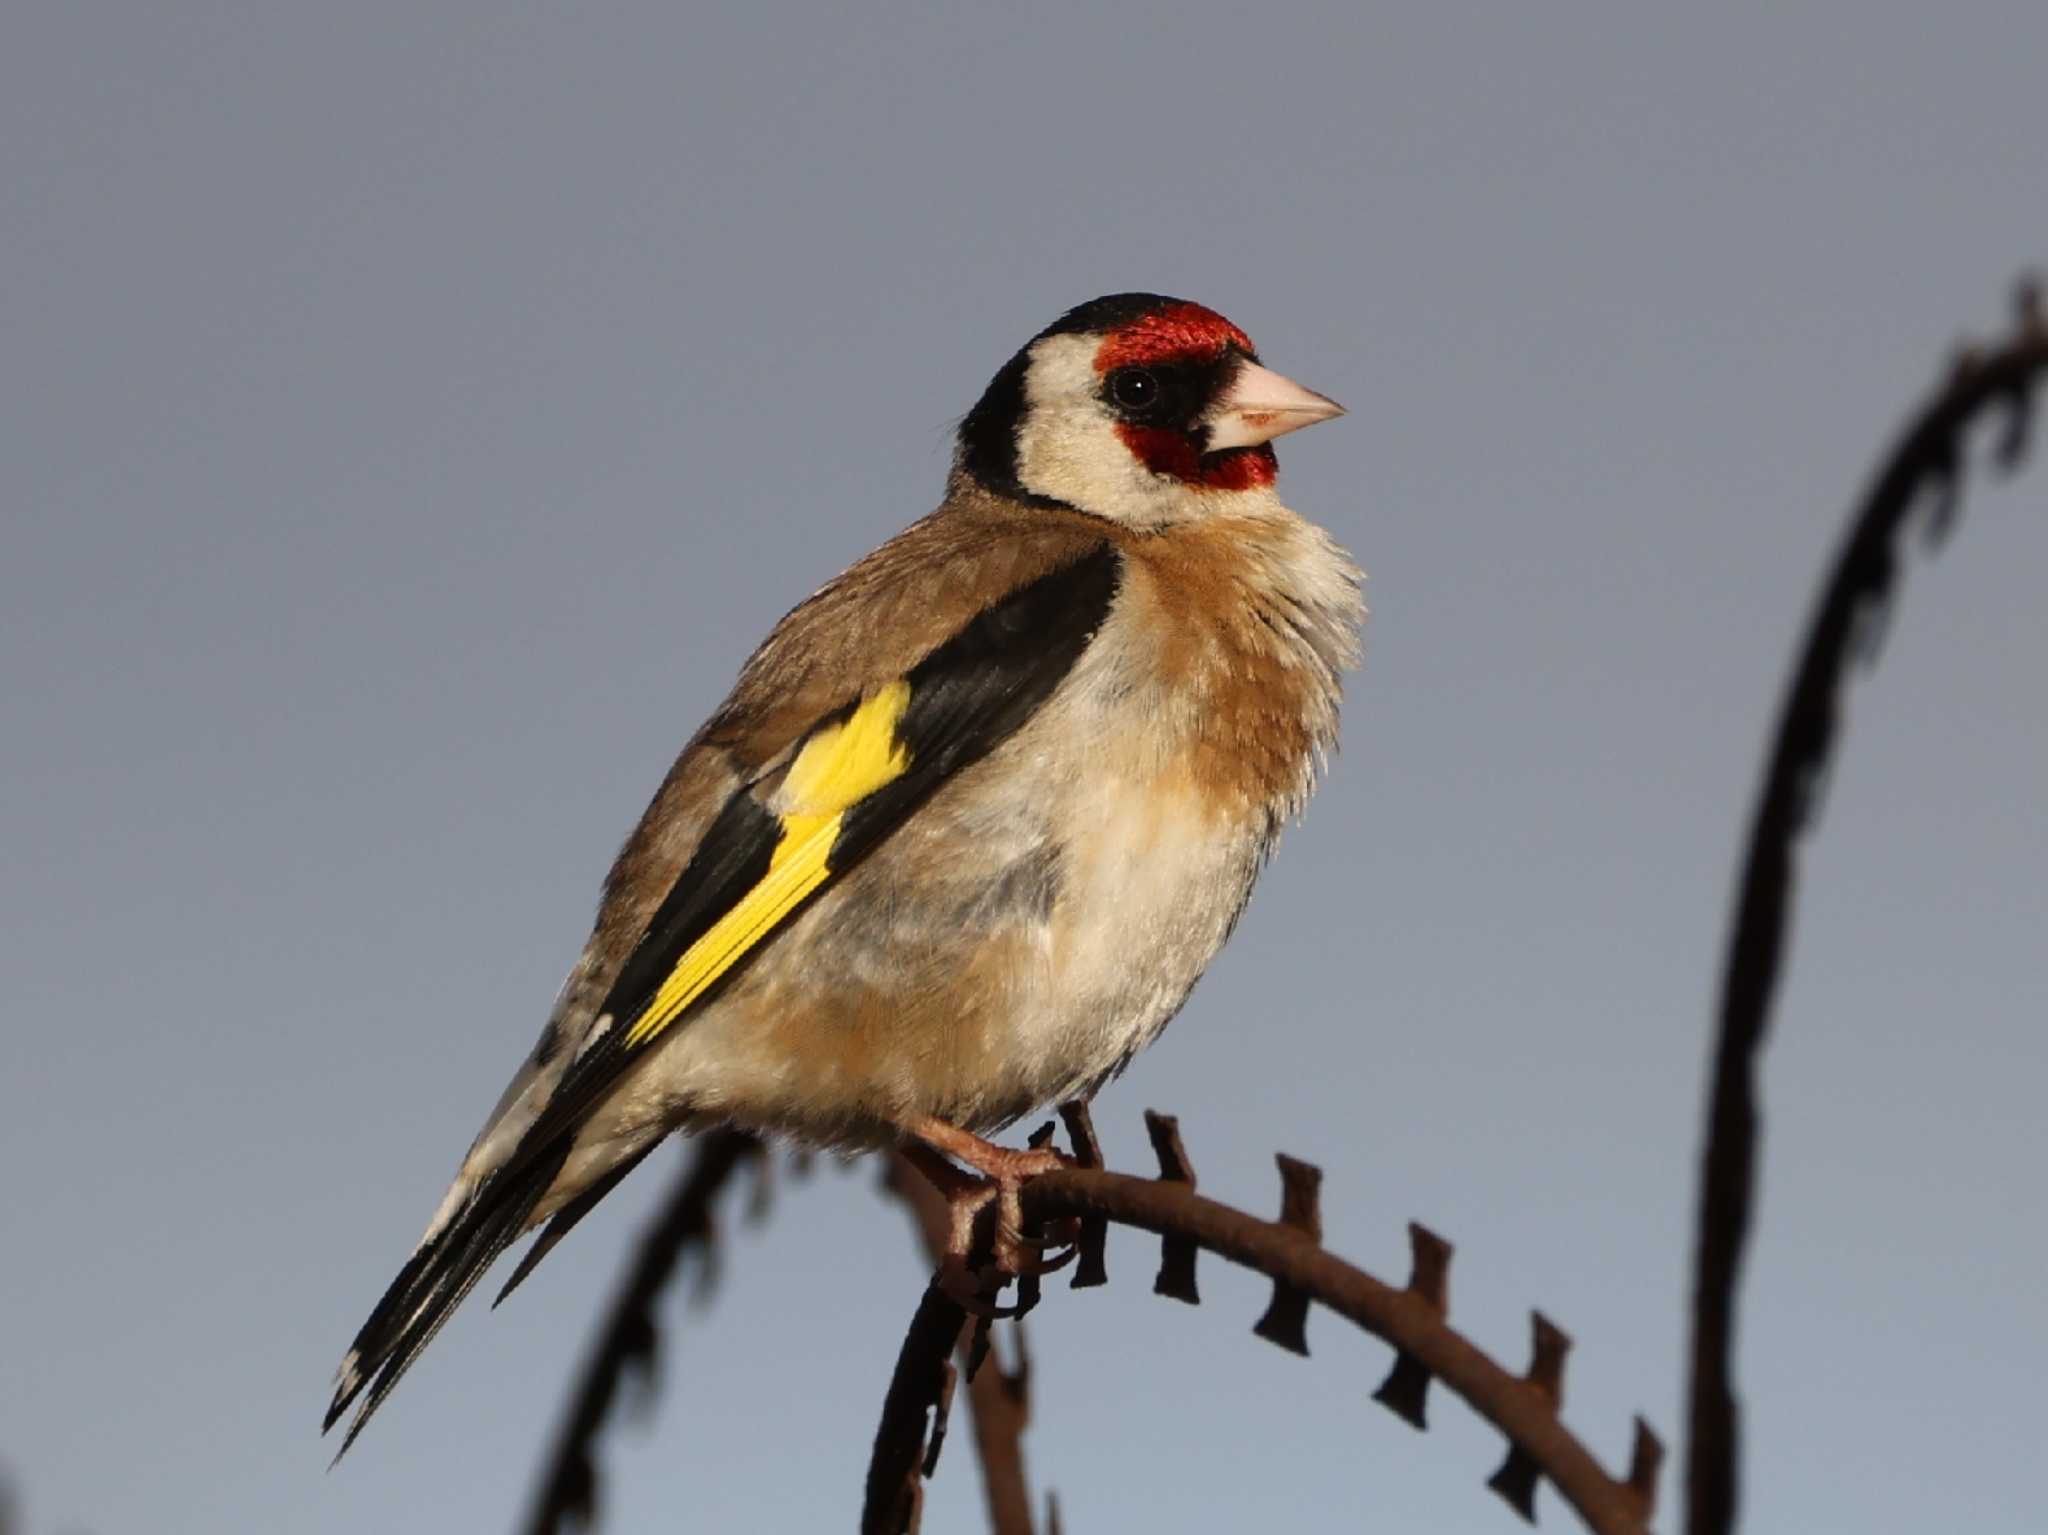 European goldfinch by Mororo